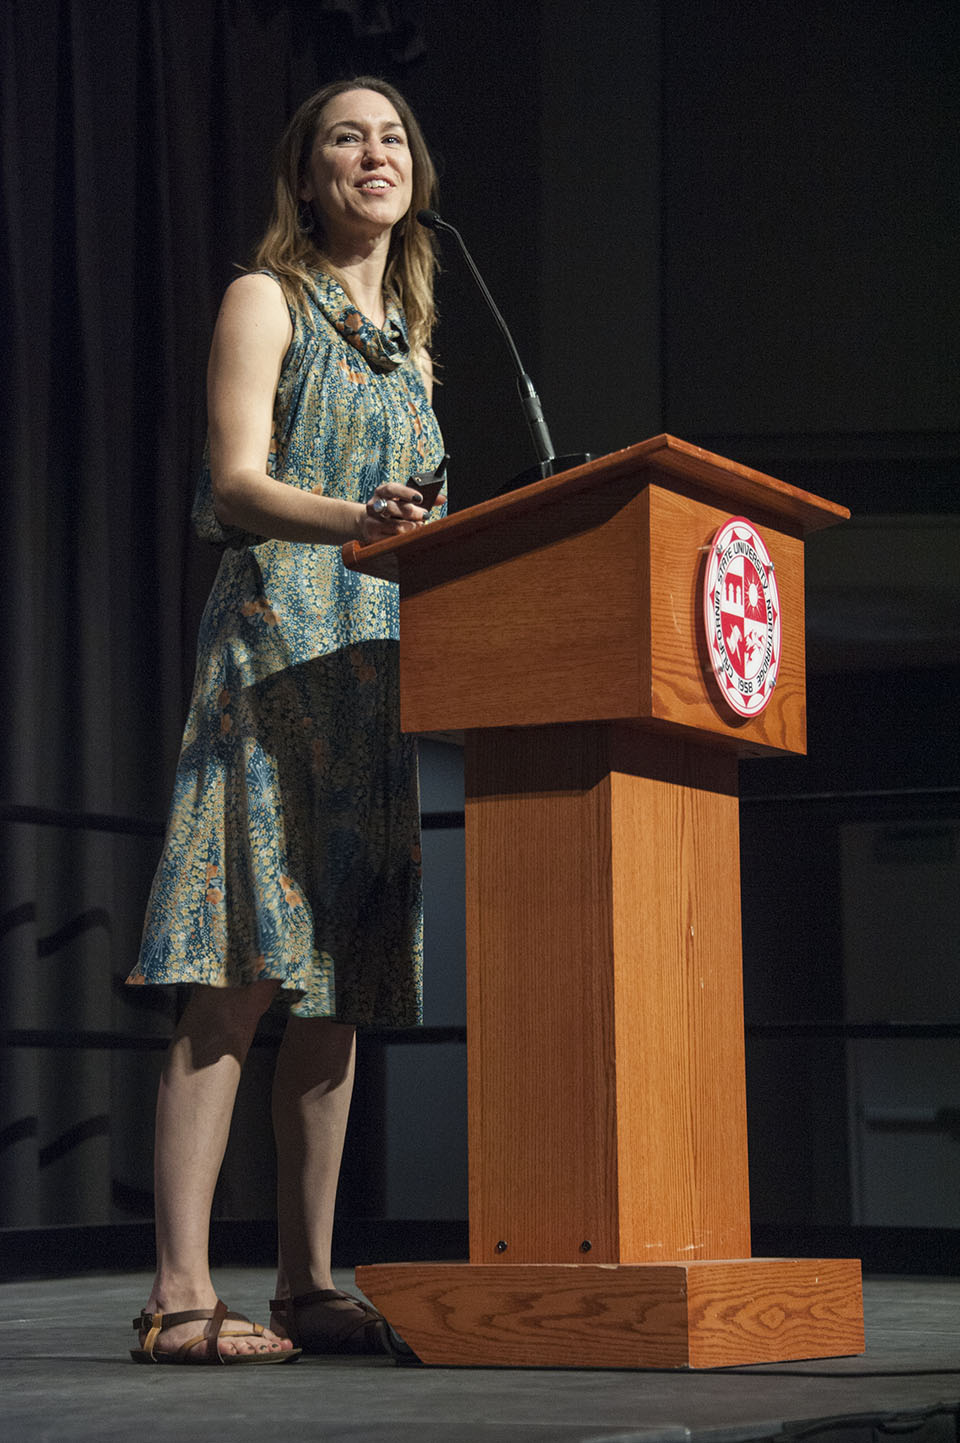 Clare Fox standing behind speaker podium.